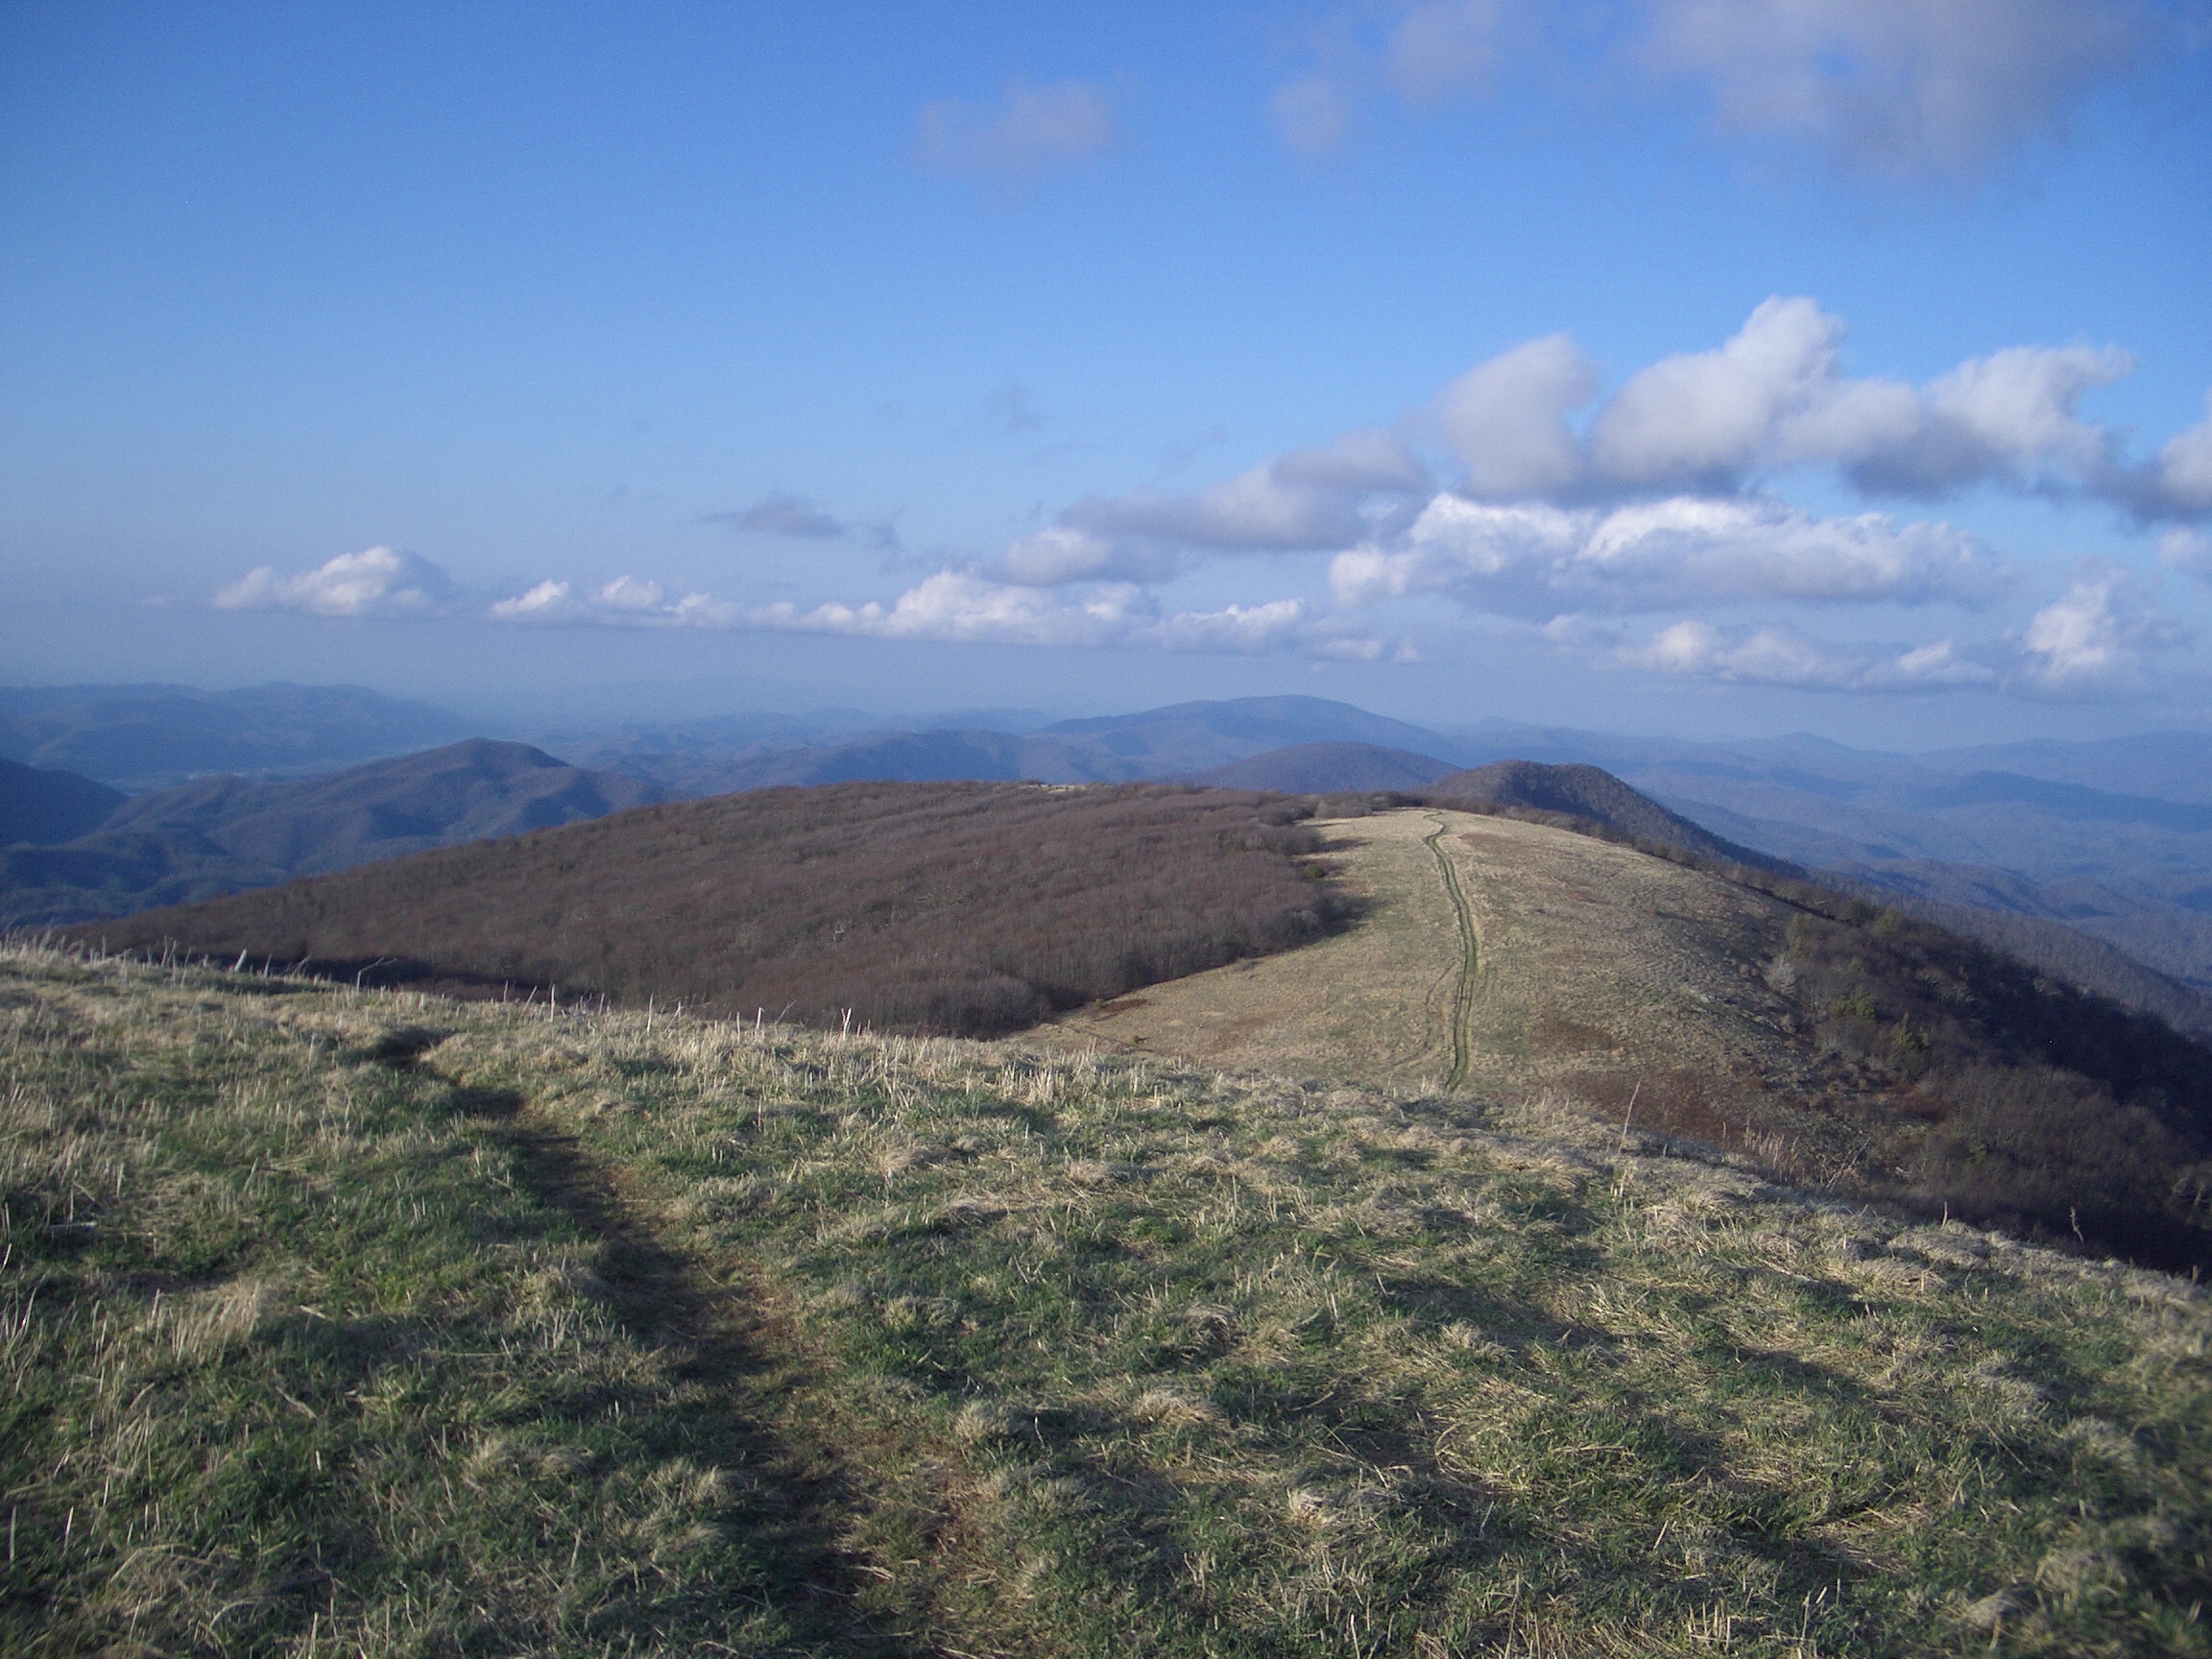 The Appalachian Trail runs across a mountain ridge line with views to the horizon of mountain range.